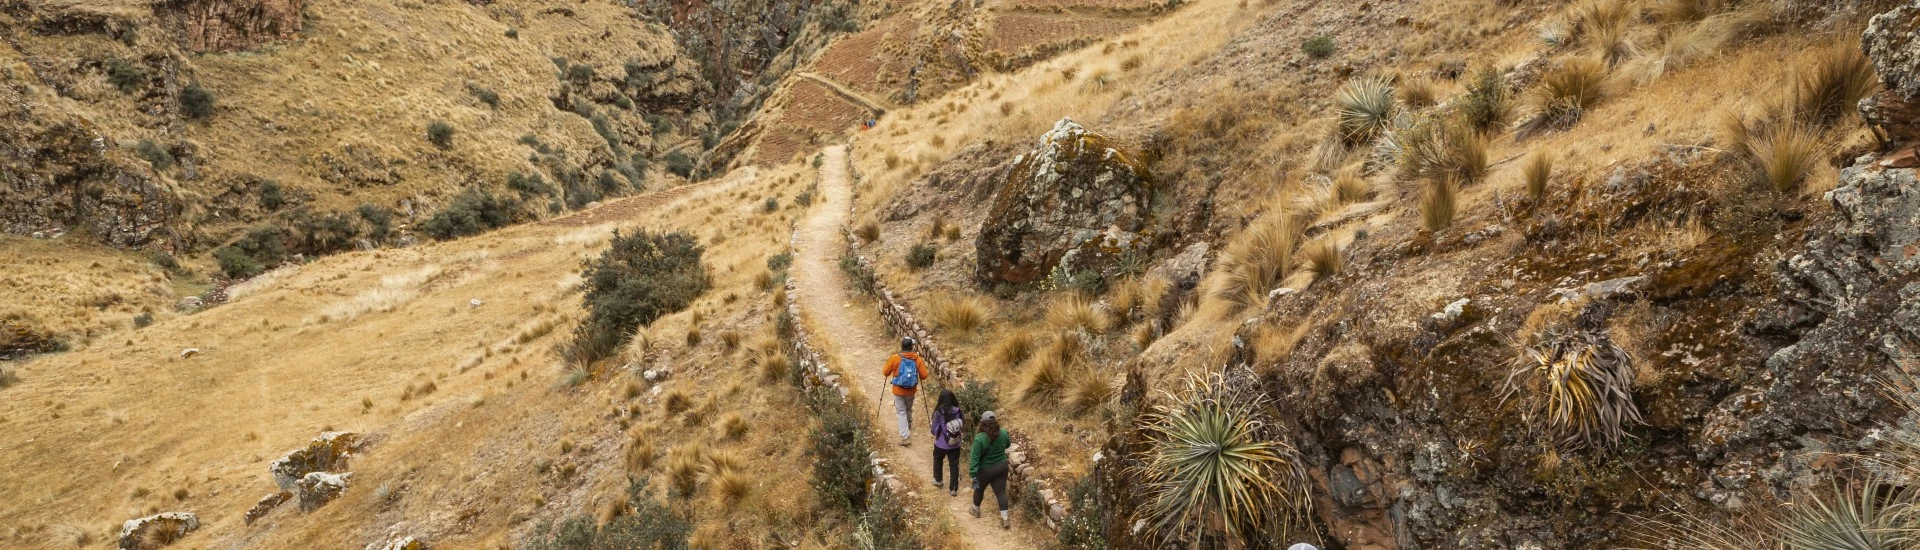 Great Inca Trail - Hikers on the way to Huchuy Qosqo